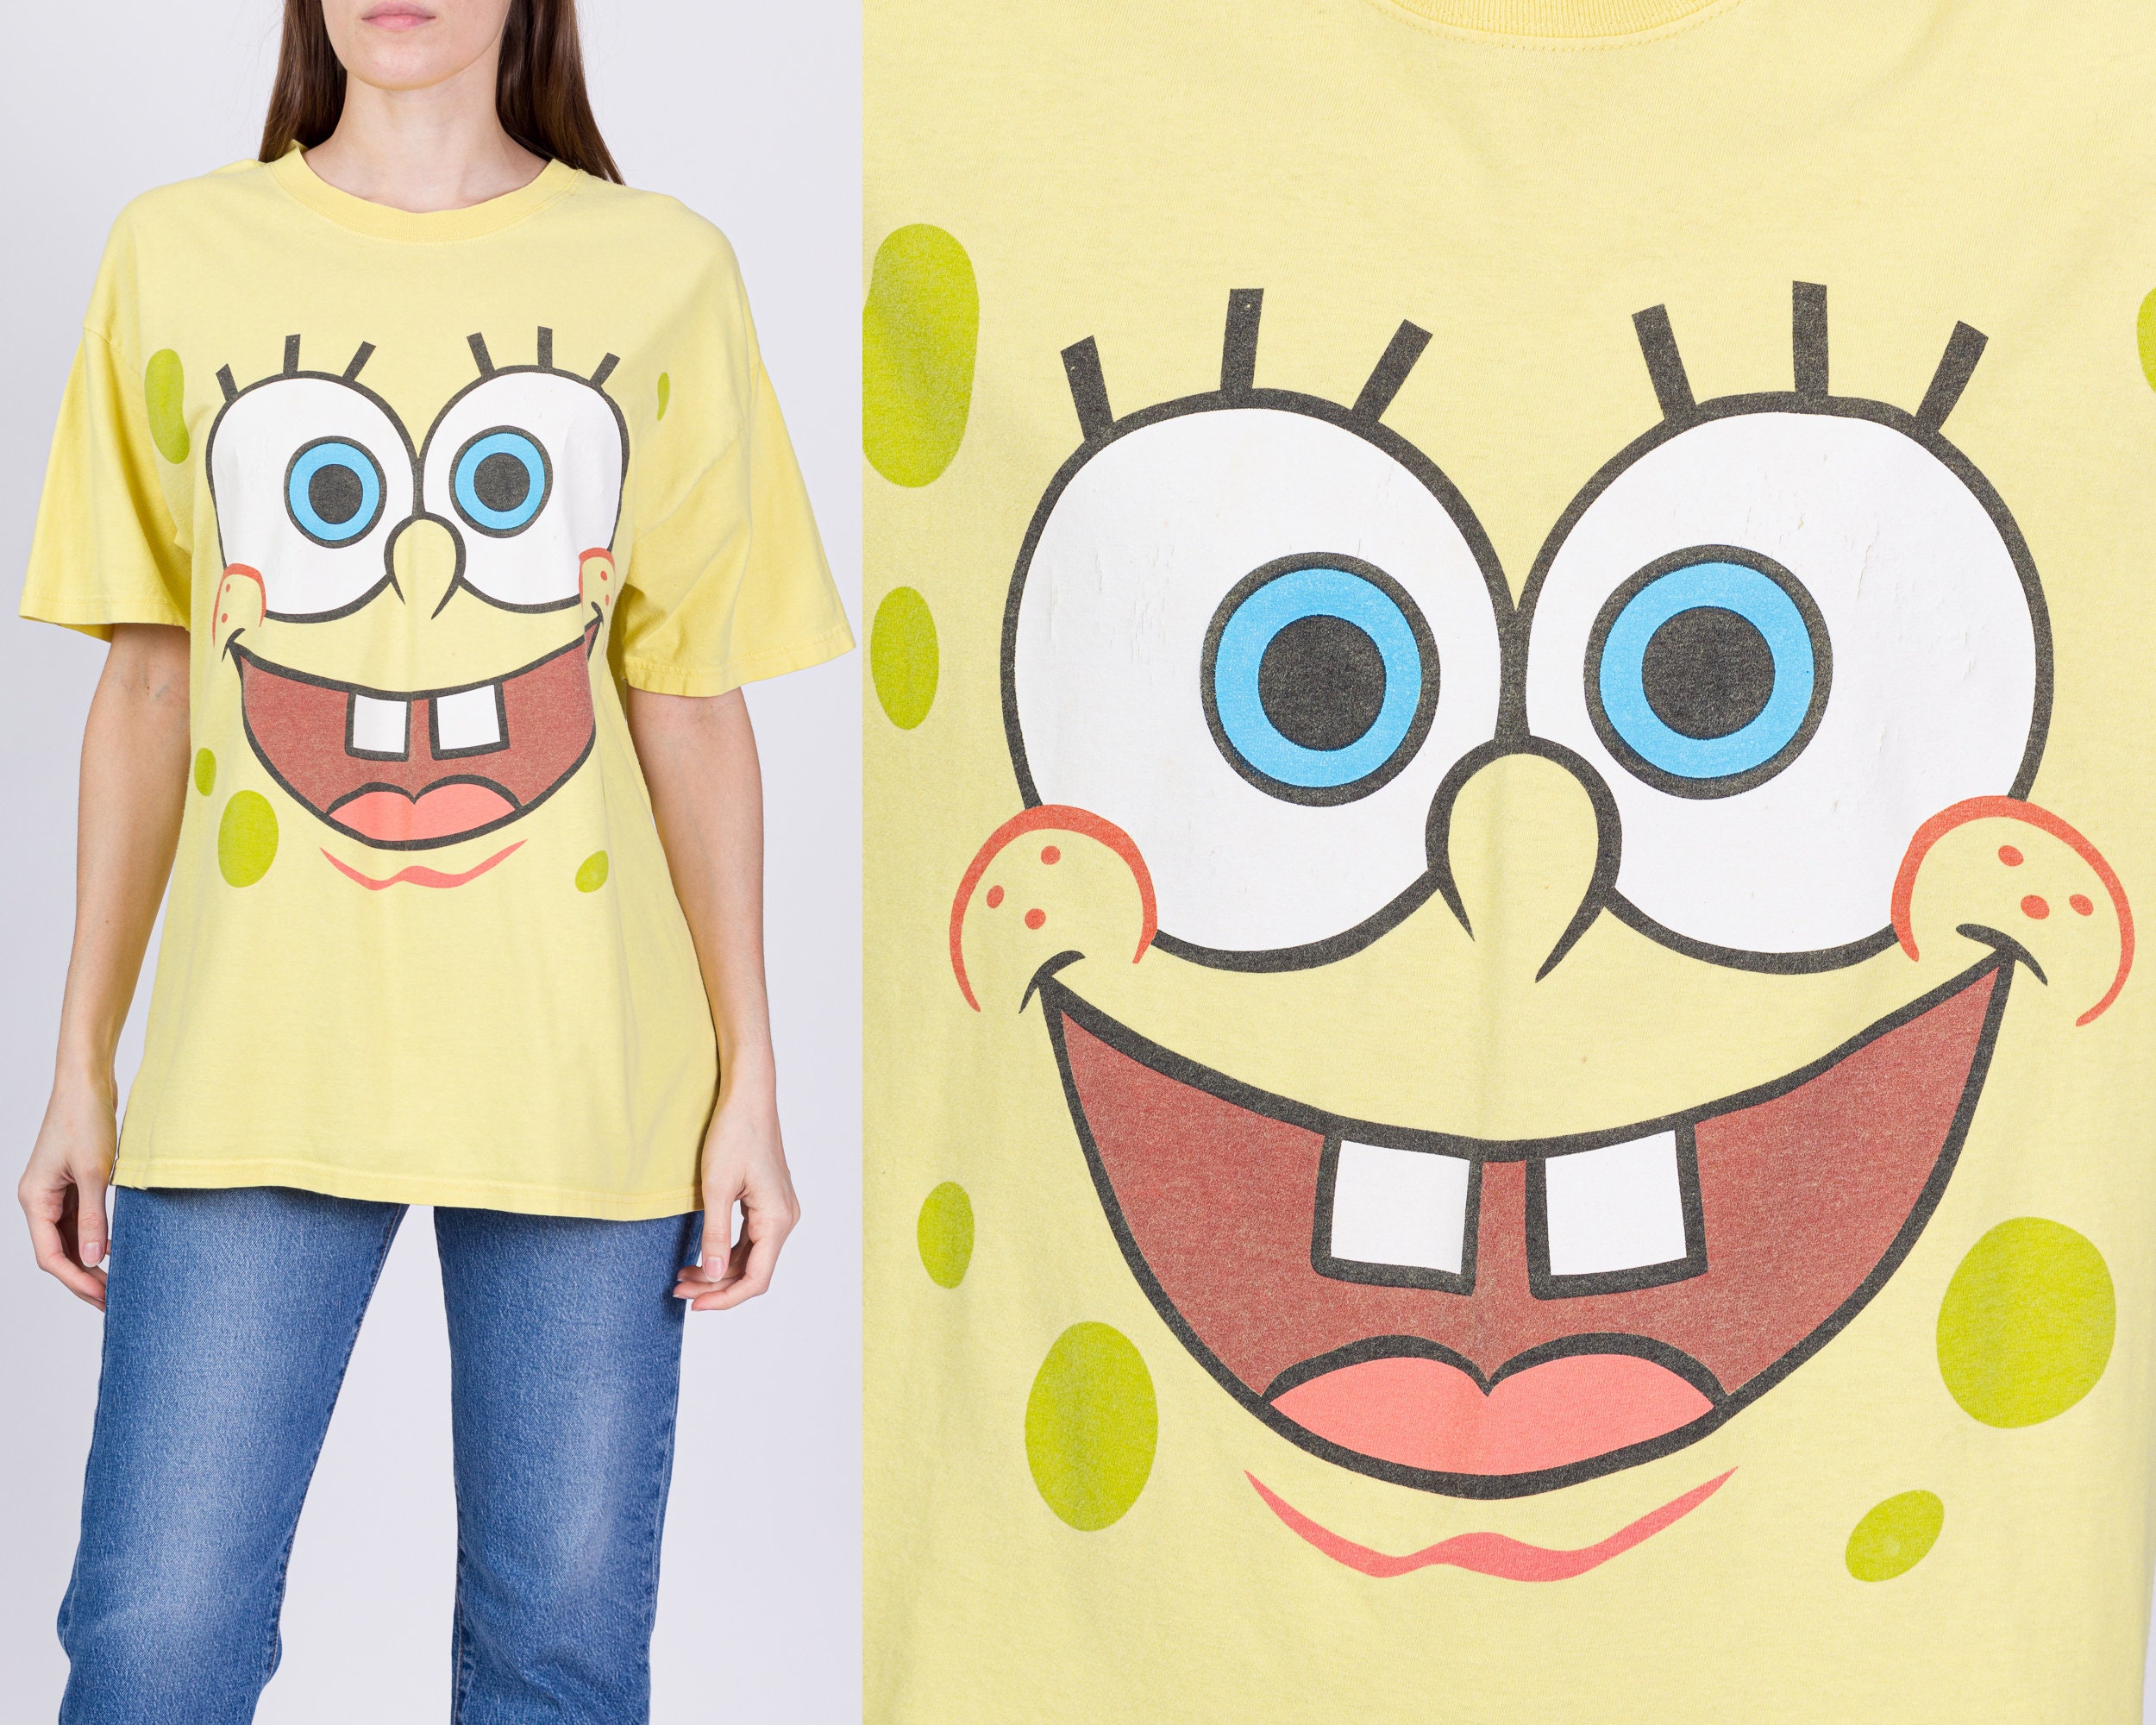 Sad Spongebob Premium T-Shirt for Sale by Seifurt